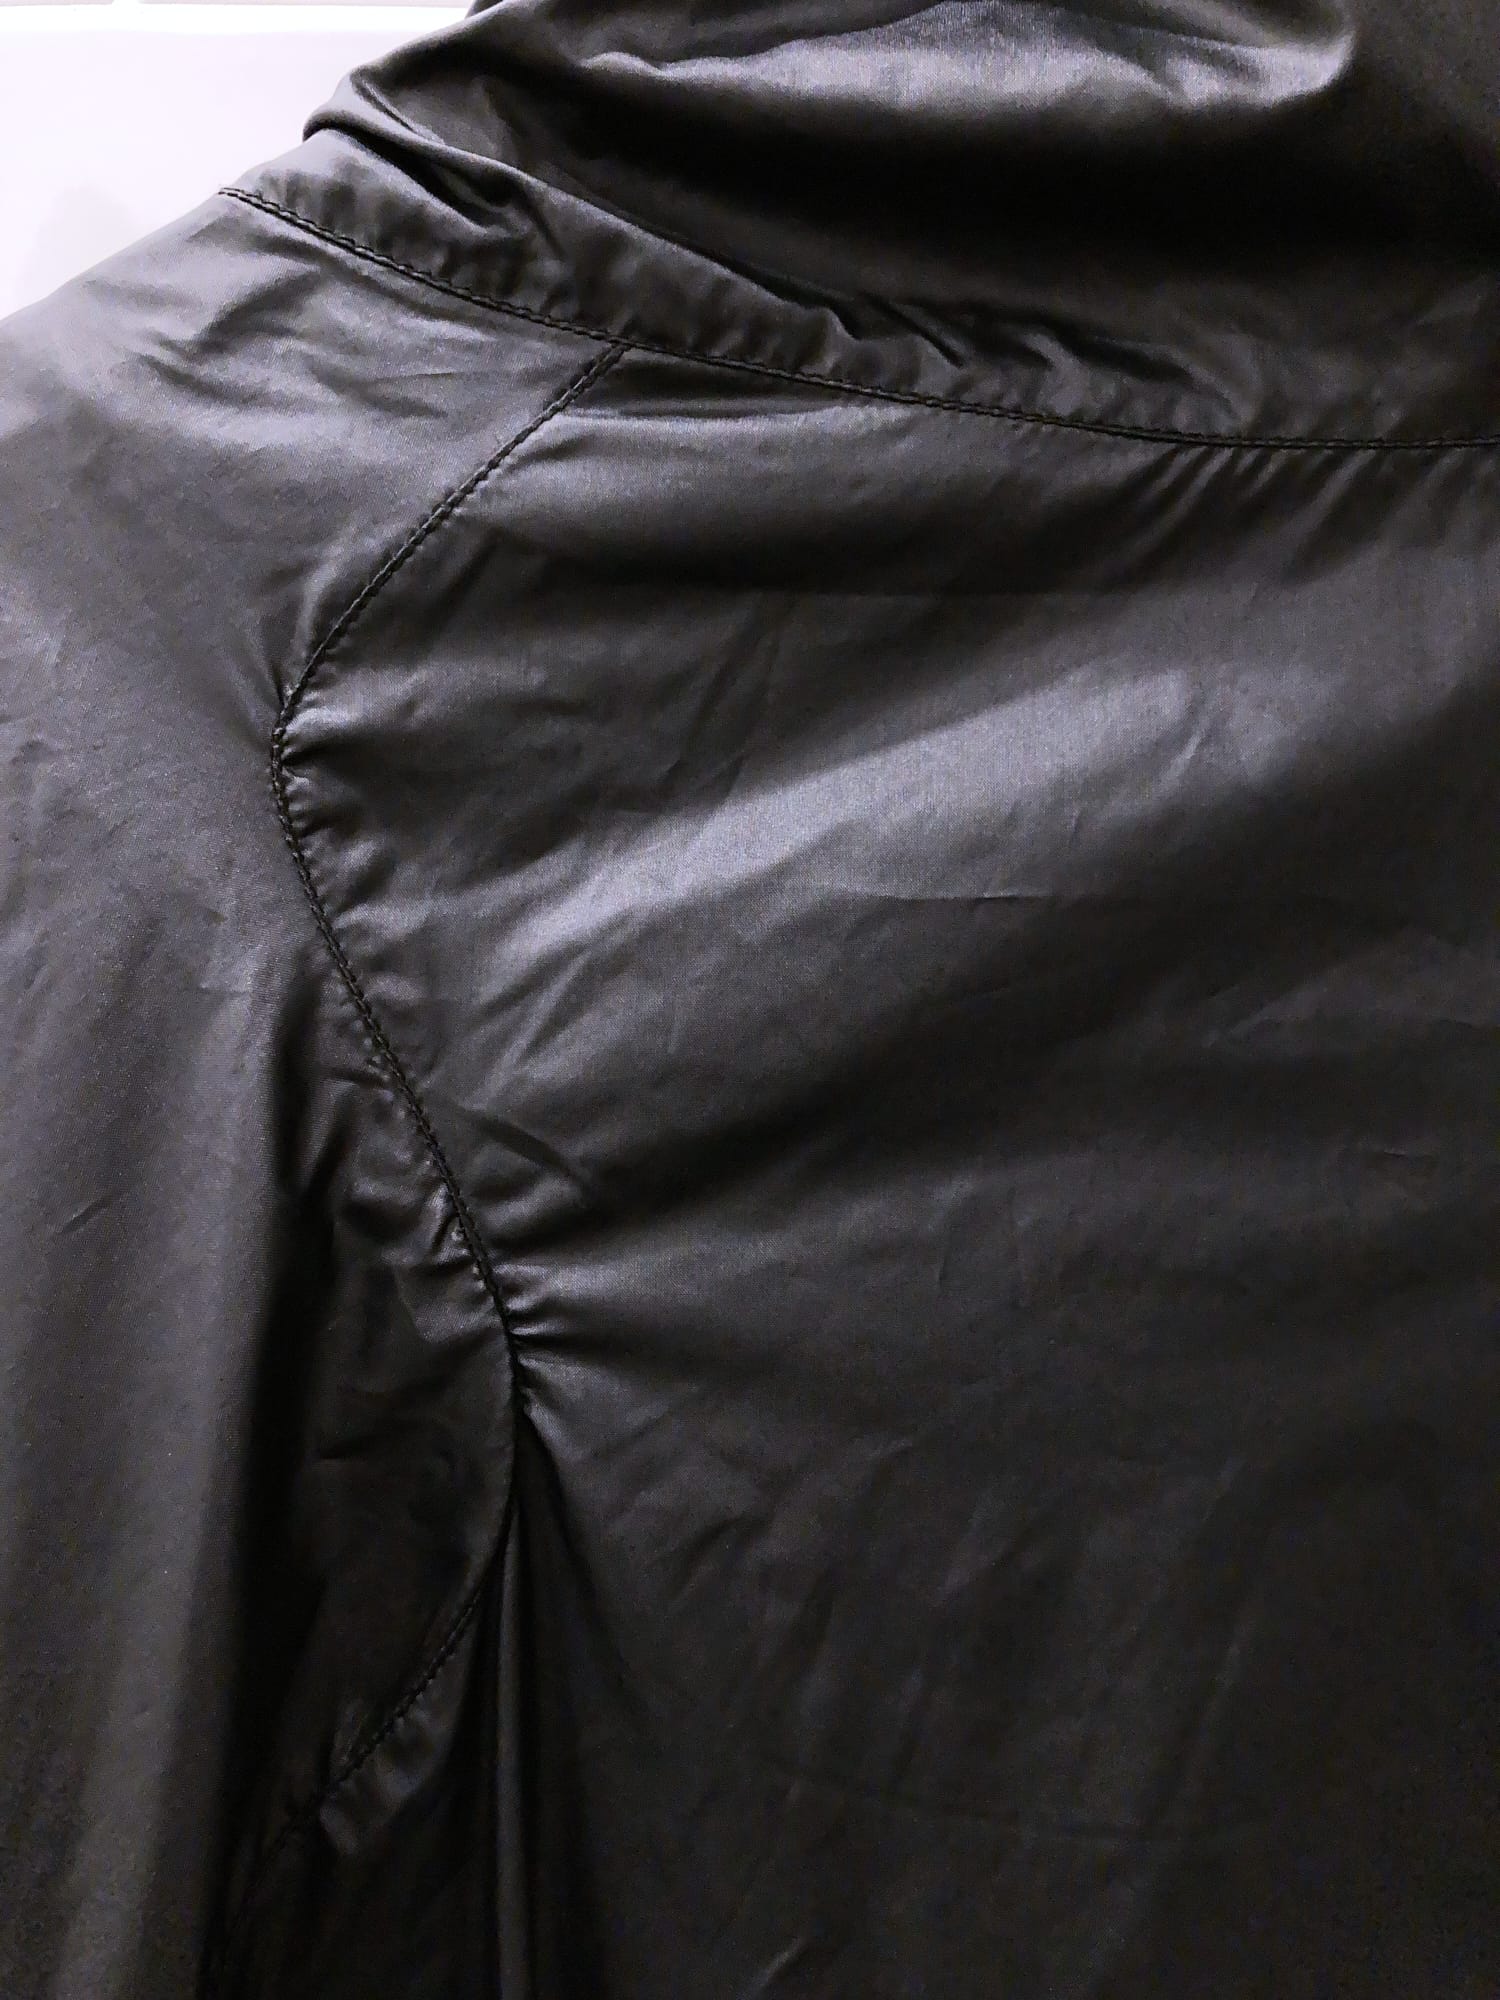 Dirk Bikkembergs 2000 dark grey nylon poncho coat with plastic neck ring